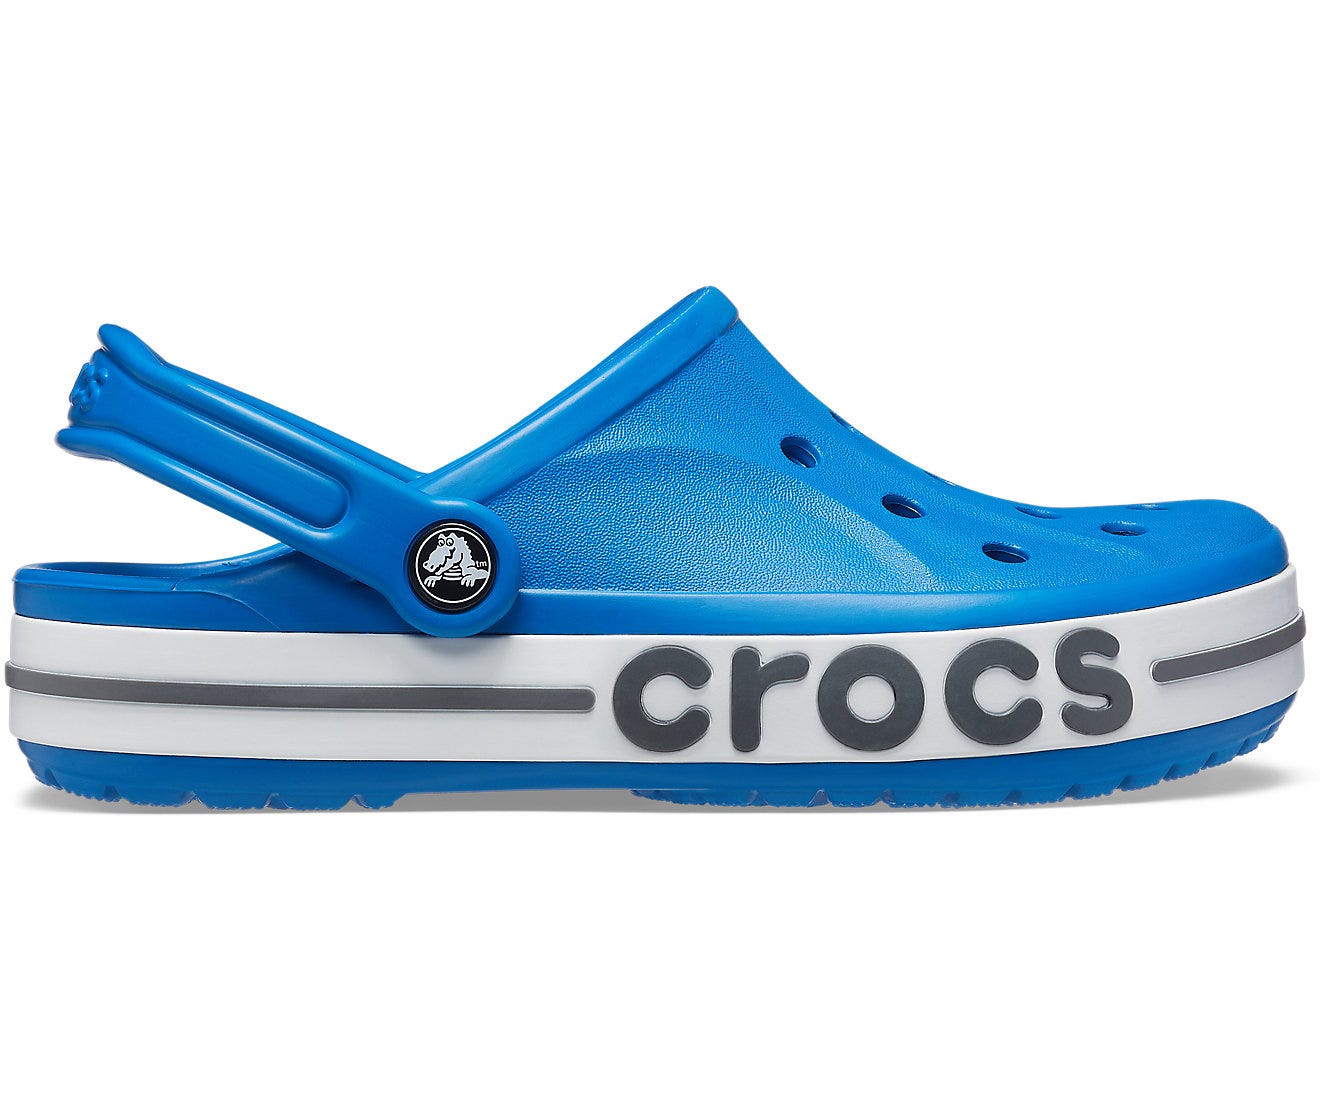 Shoes For Men - Buy Crocs Men's Footwear At Best Price - Crocs™ India